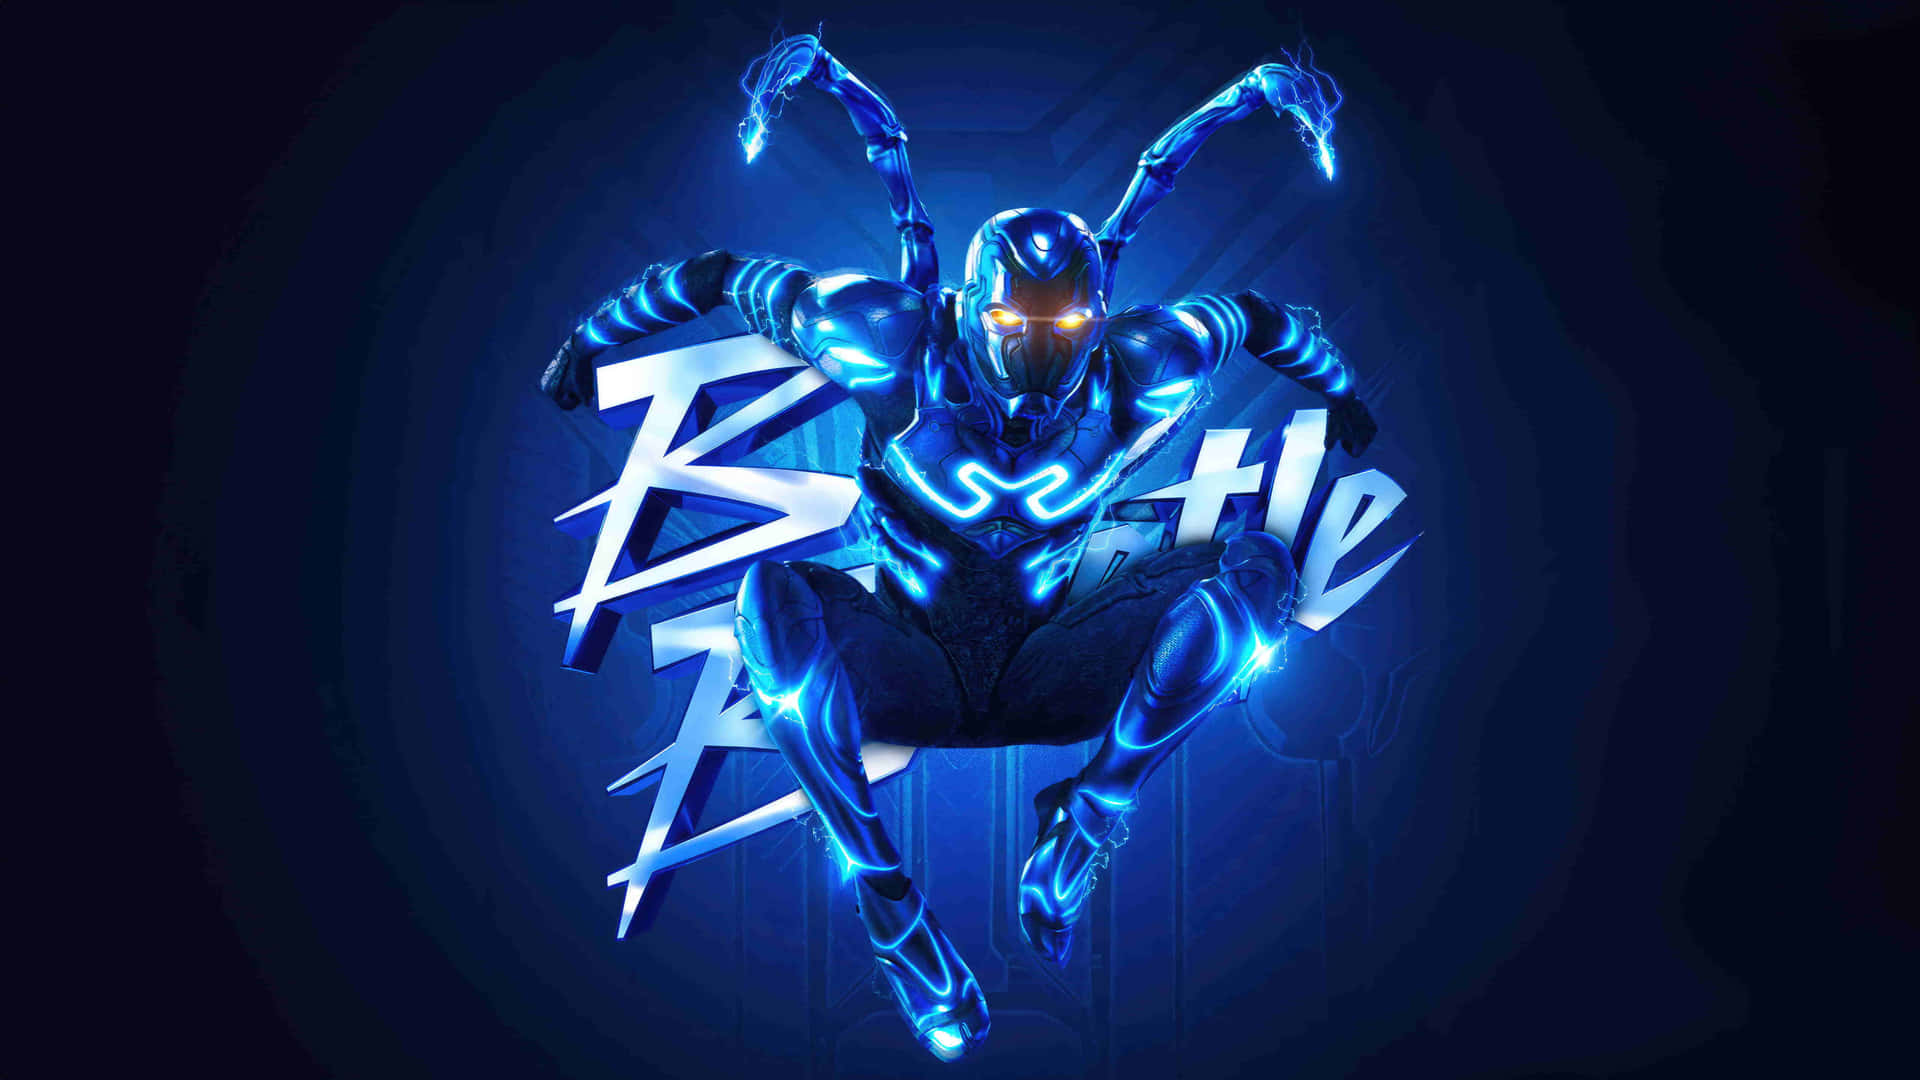 Blue Beetle Hero Pose Wallpaper